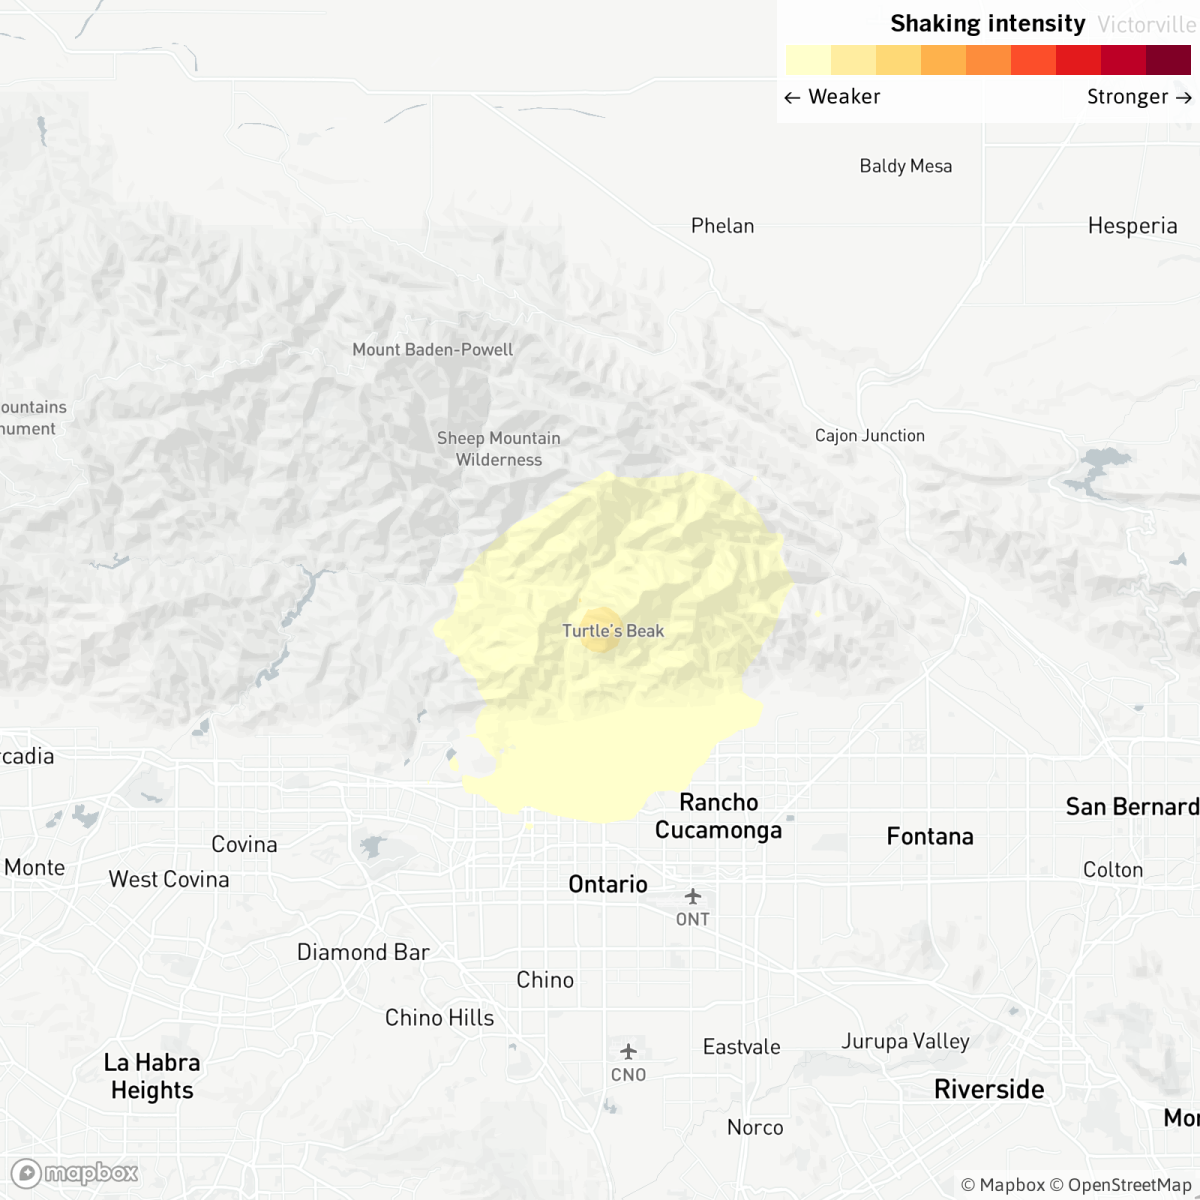 Map of magnitude 3.2 earthquake near Rancho Cucamonga.